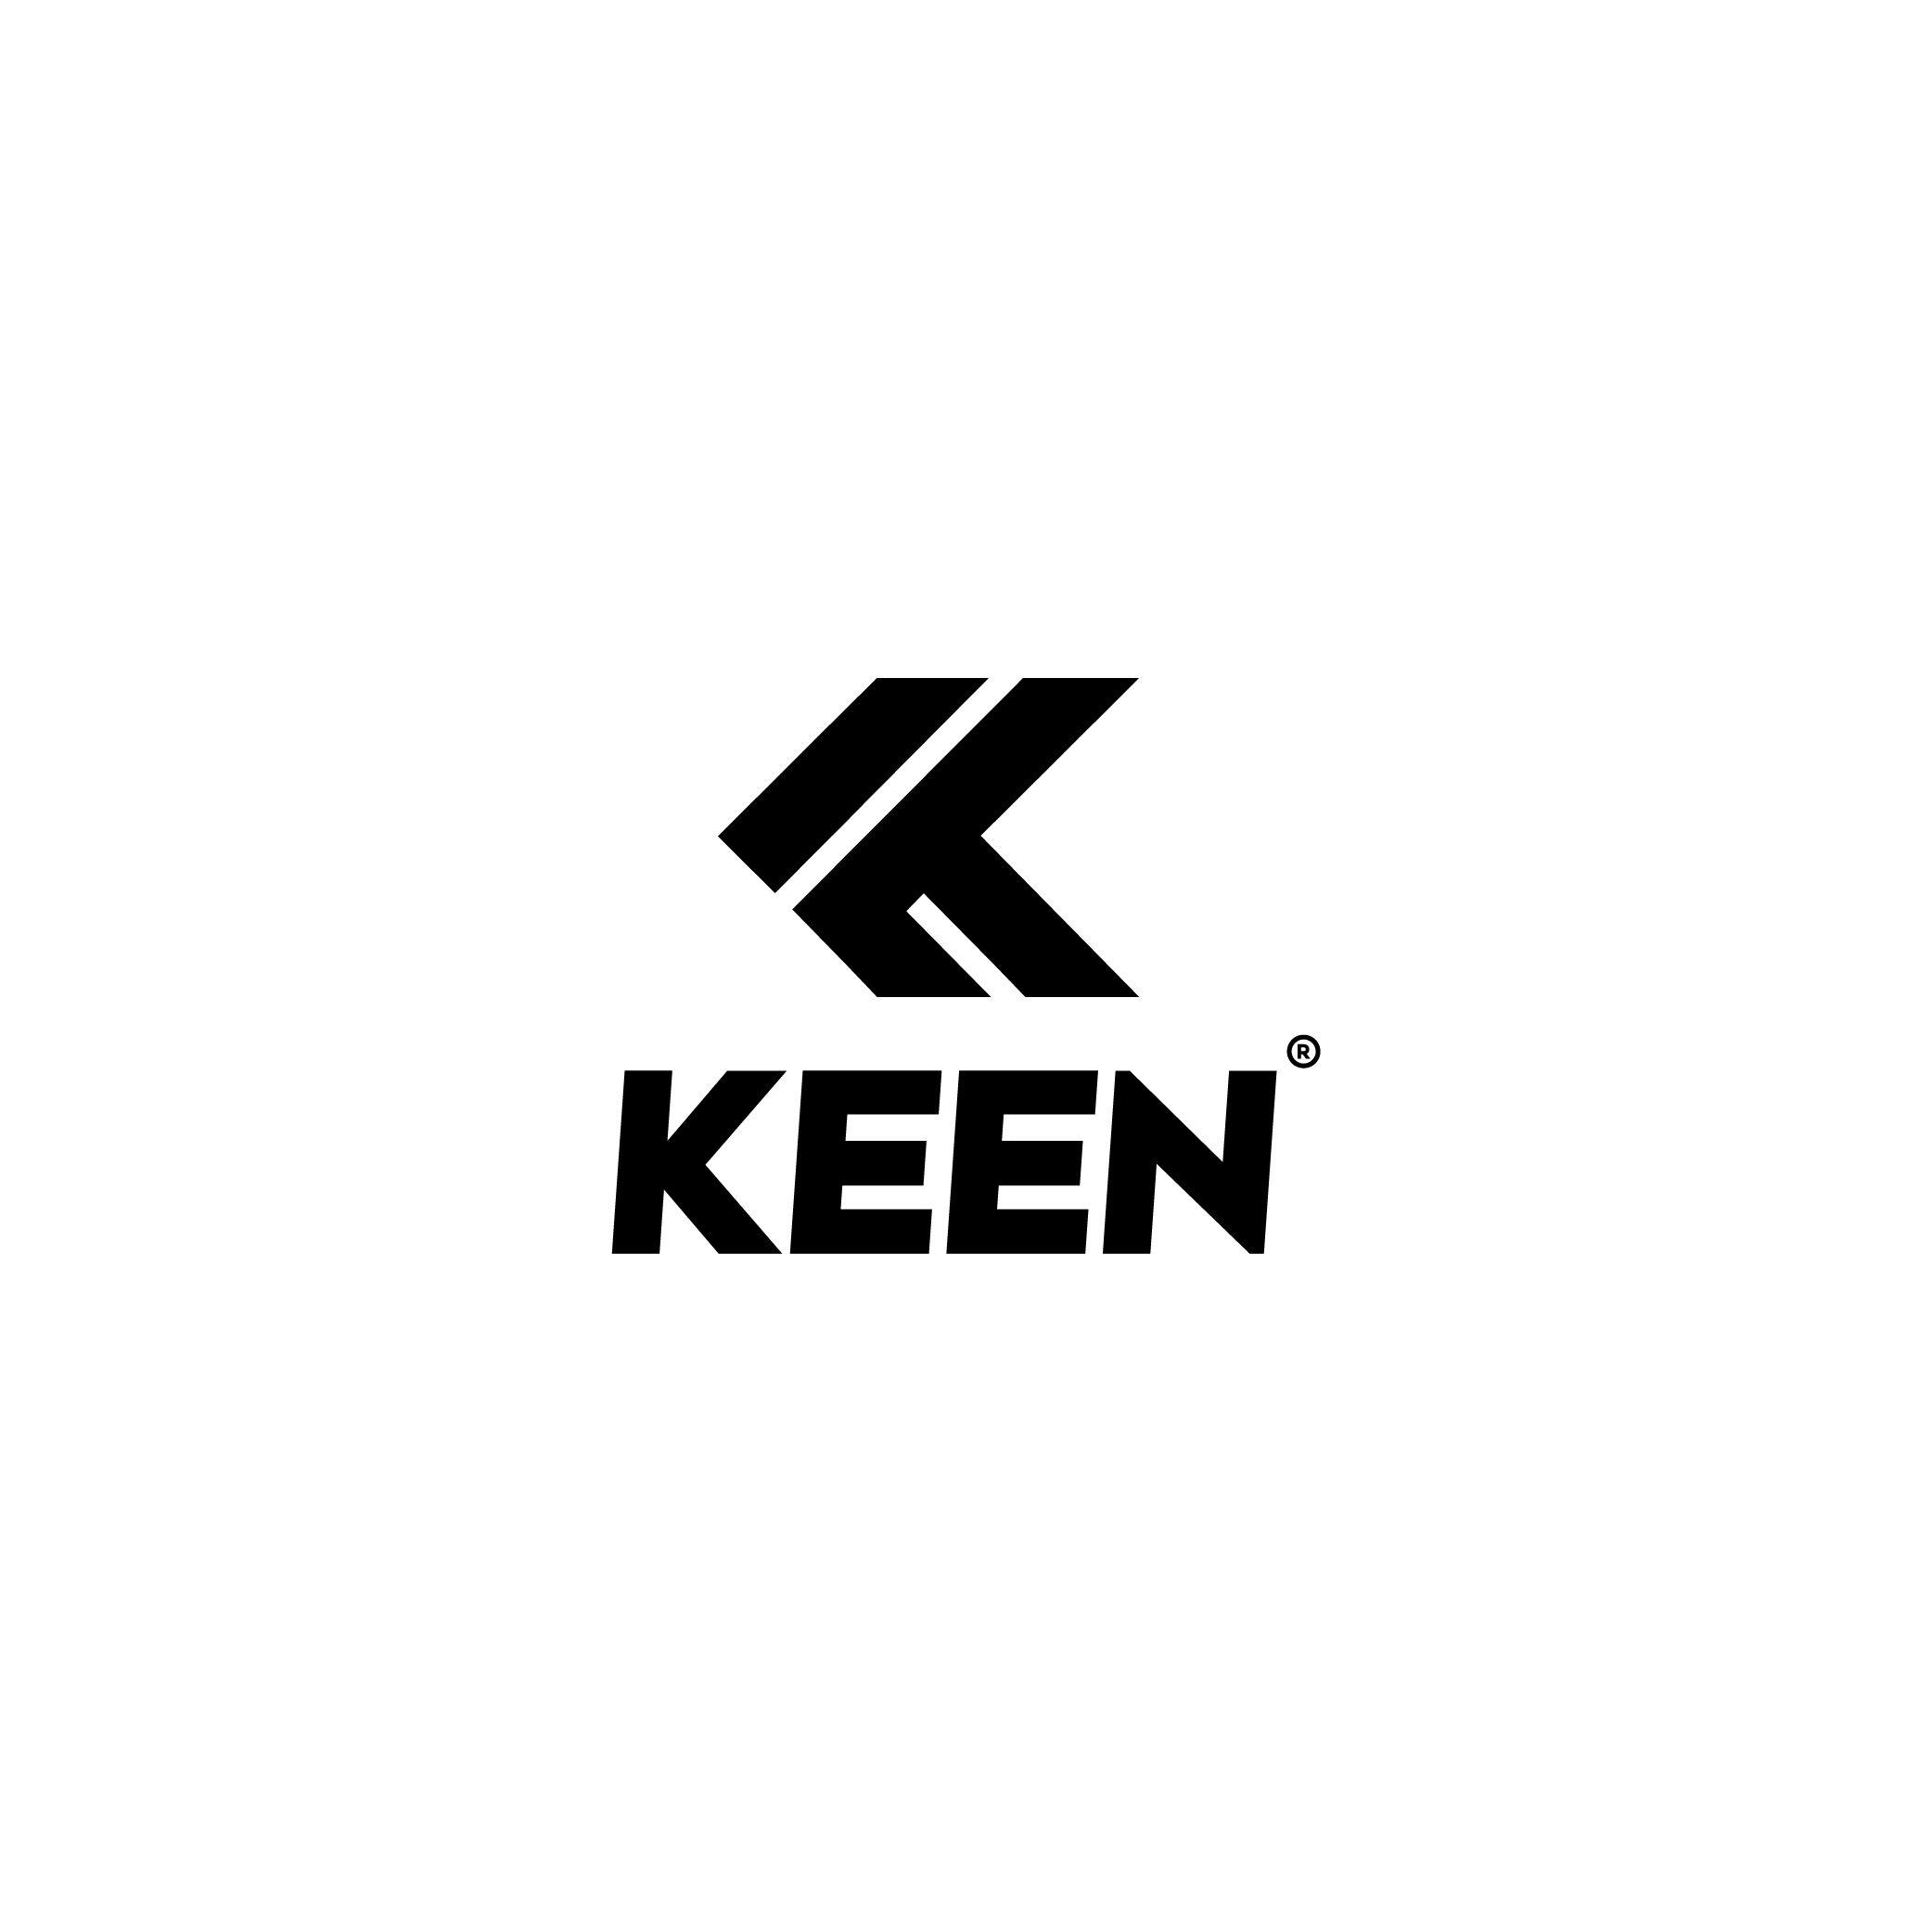 Keen Logo - KEEN LOGO DESIGN CONCEPT 2 – High Quality Graphic Design & Services